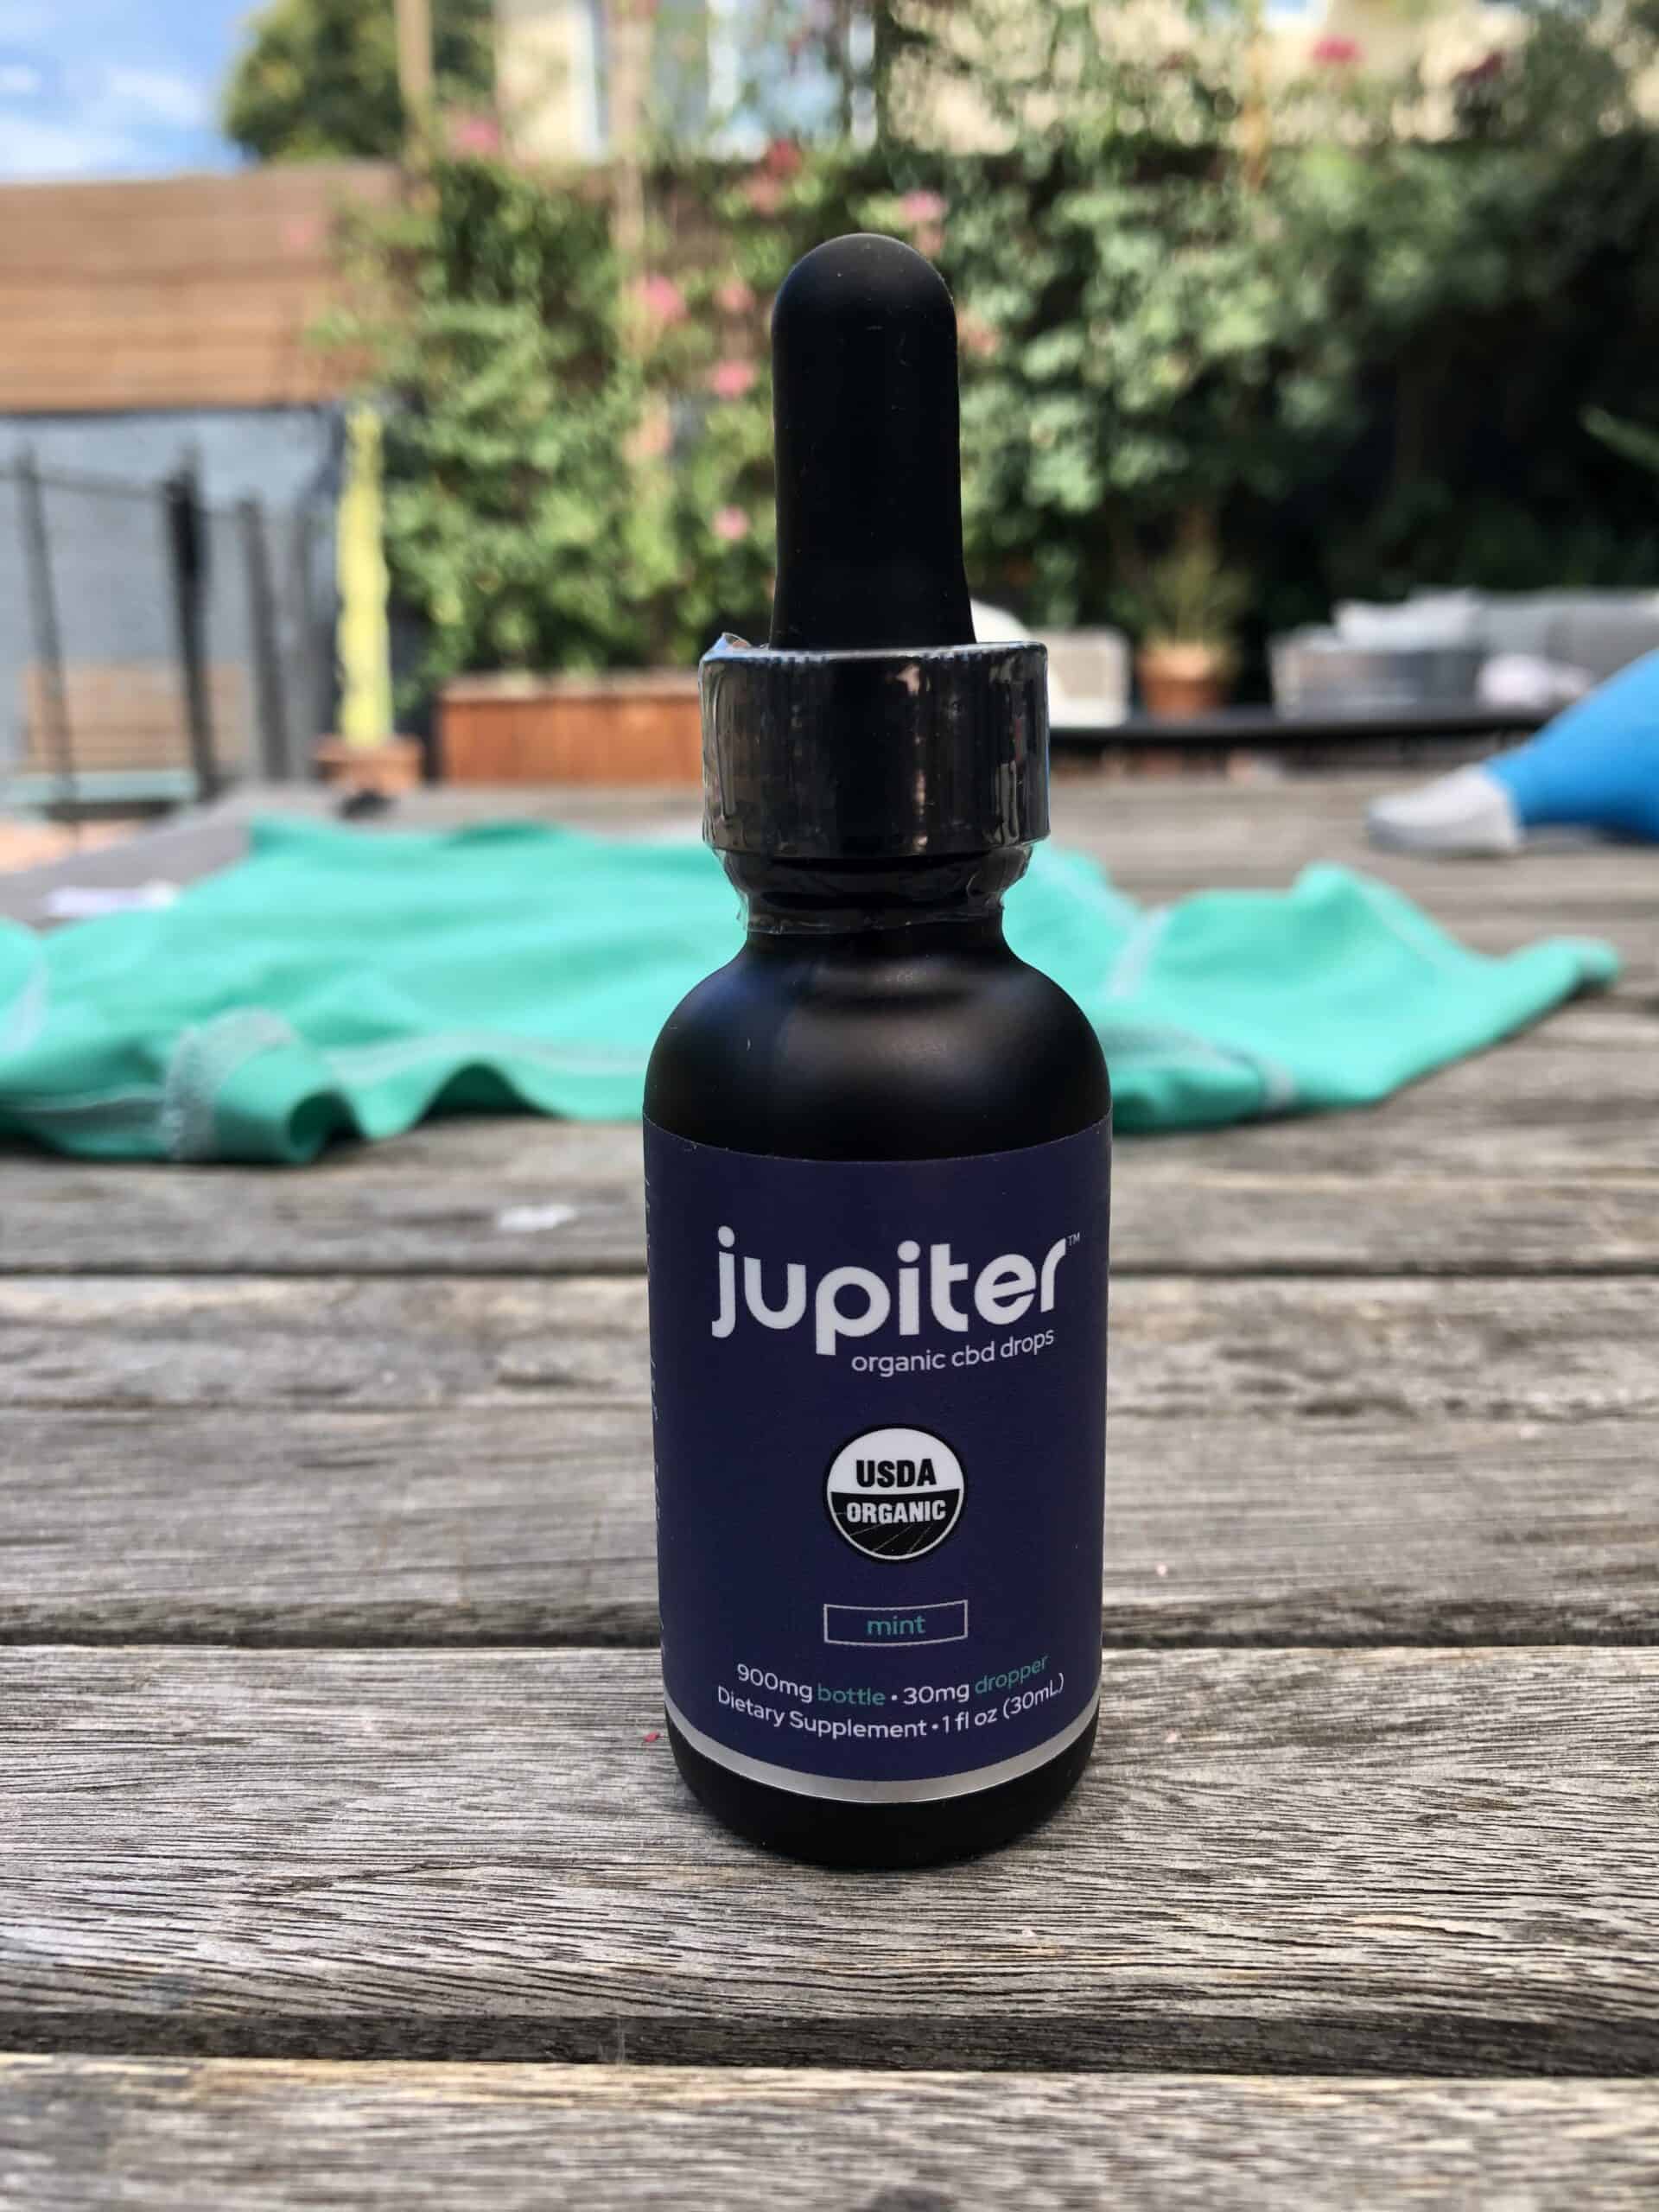 Jupiter Organic CBD Drops mint 900 mg save on cannabis review 